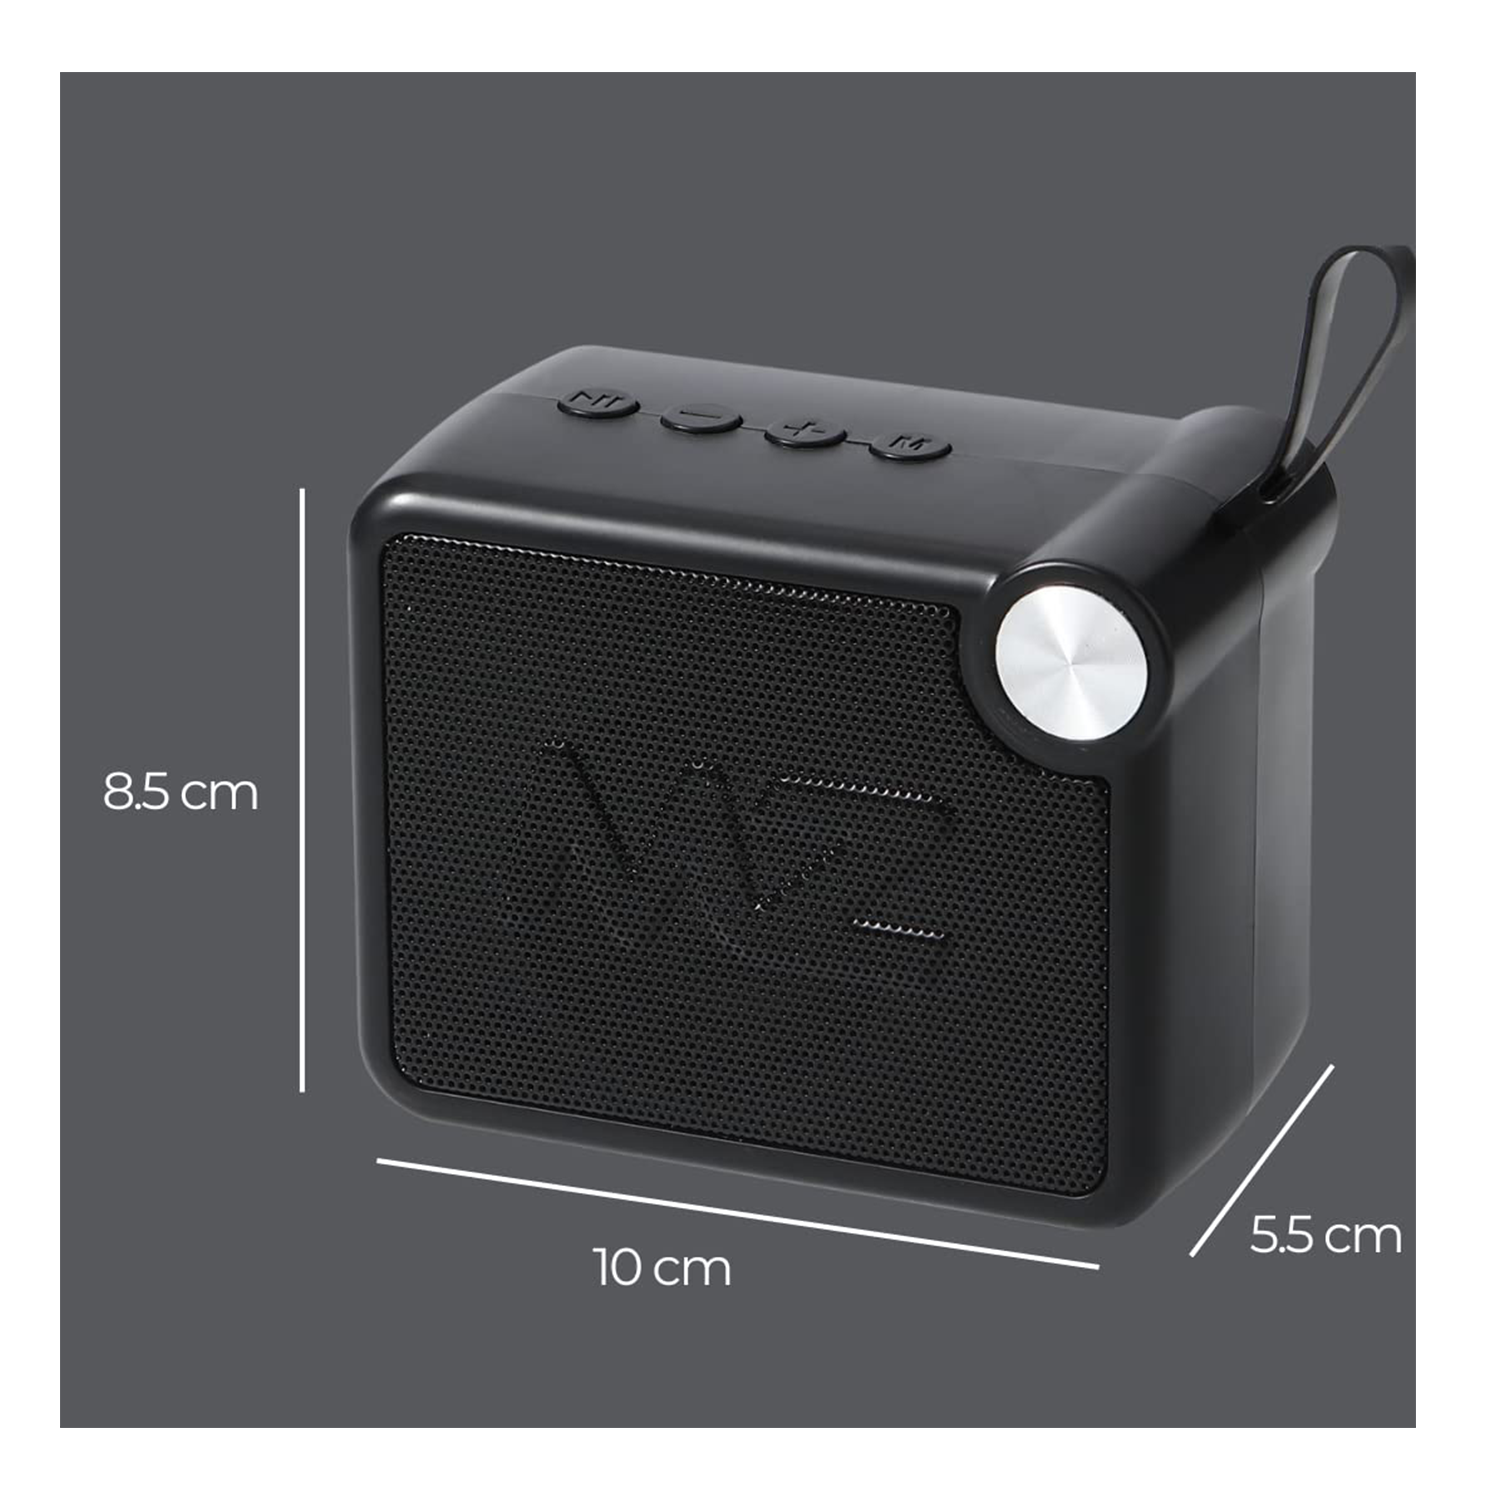 MZ M406SP (Portable Bluetooth Speaker) Dynamic Thunder Sound, 1200mAh Battery 5 W Bluetooth Speaker